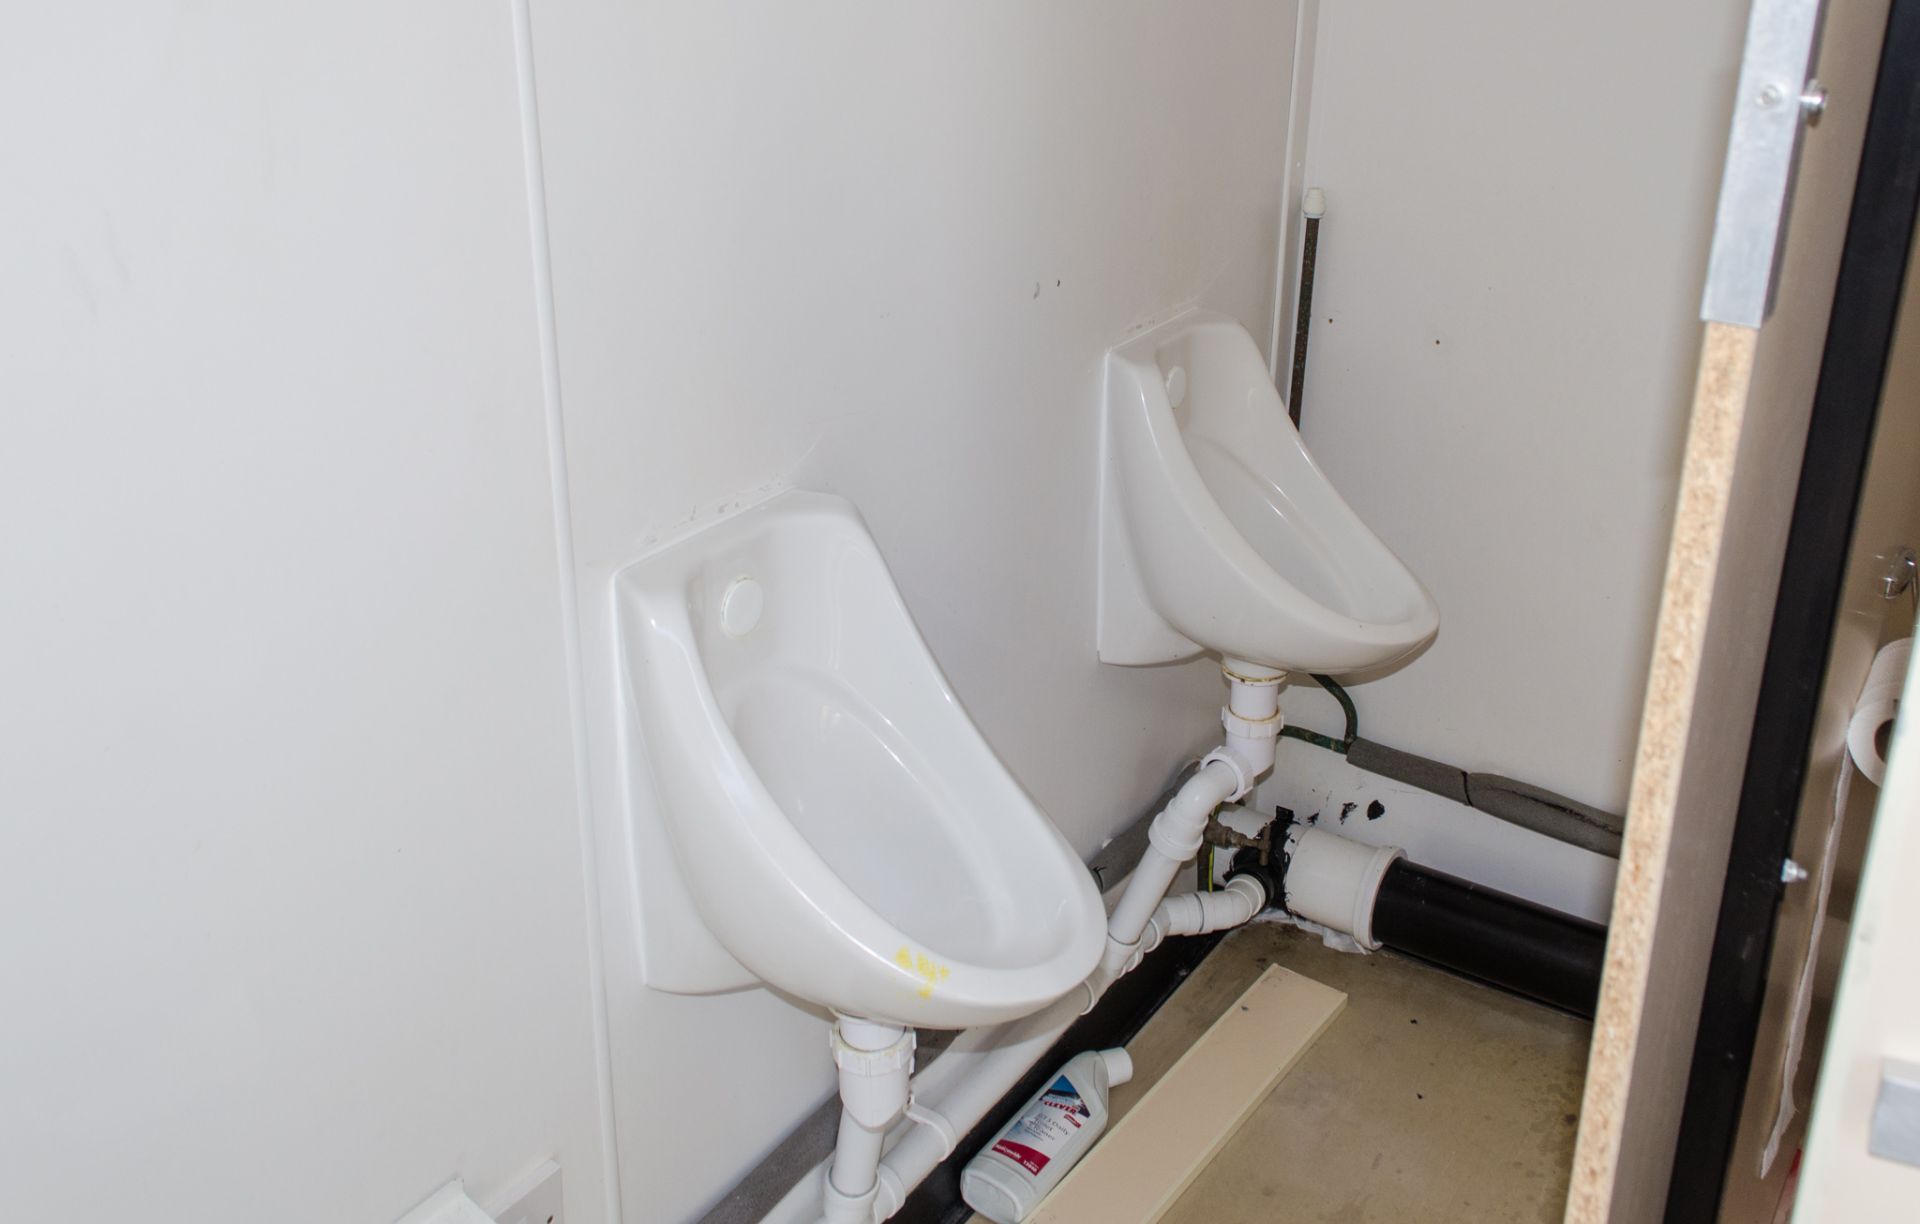 12 ft x 8 ft steel jack leg site 2+1 toilet site unit Comprising of: gents toilet (2 - urinals, - Image 6 of 9